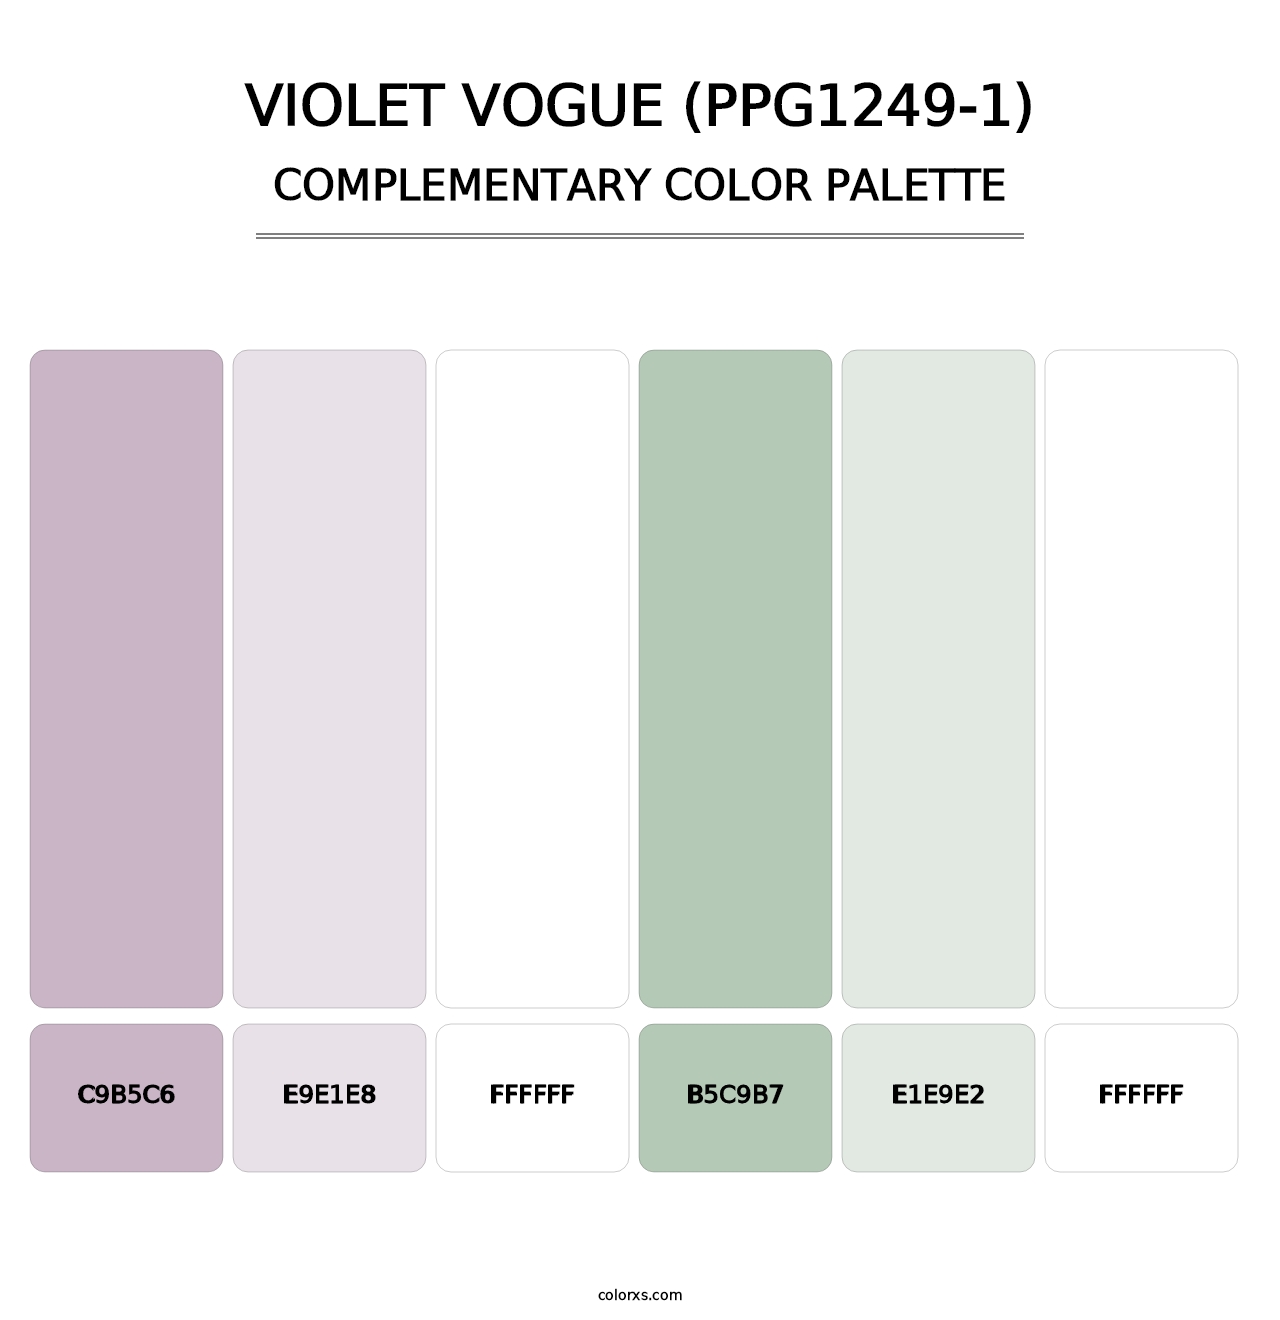 Violet Vogue (PPG1249-1) - Complementary Color Palette